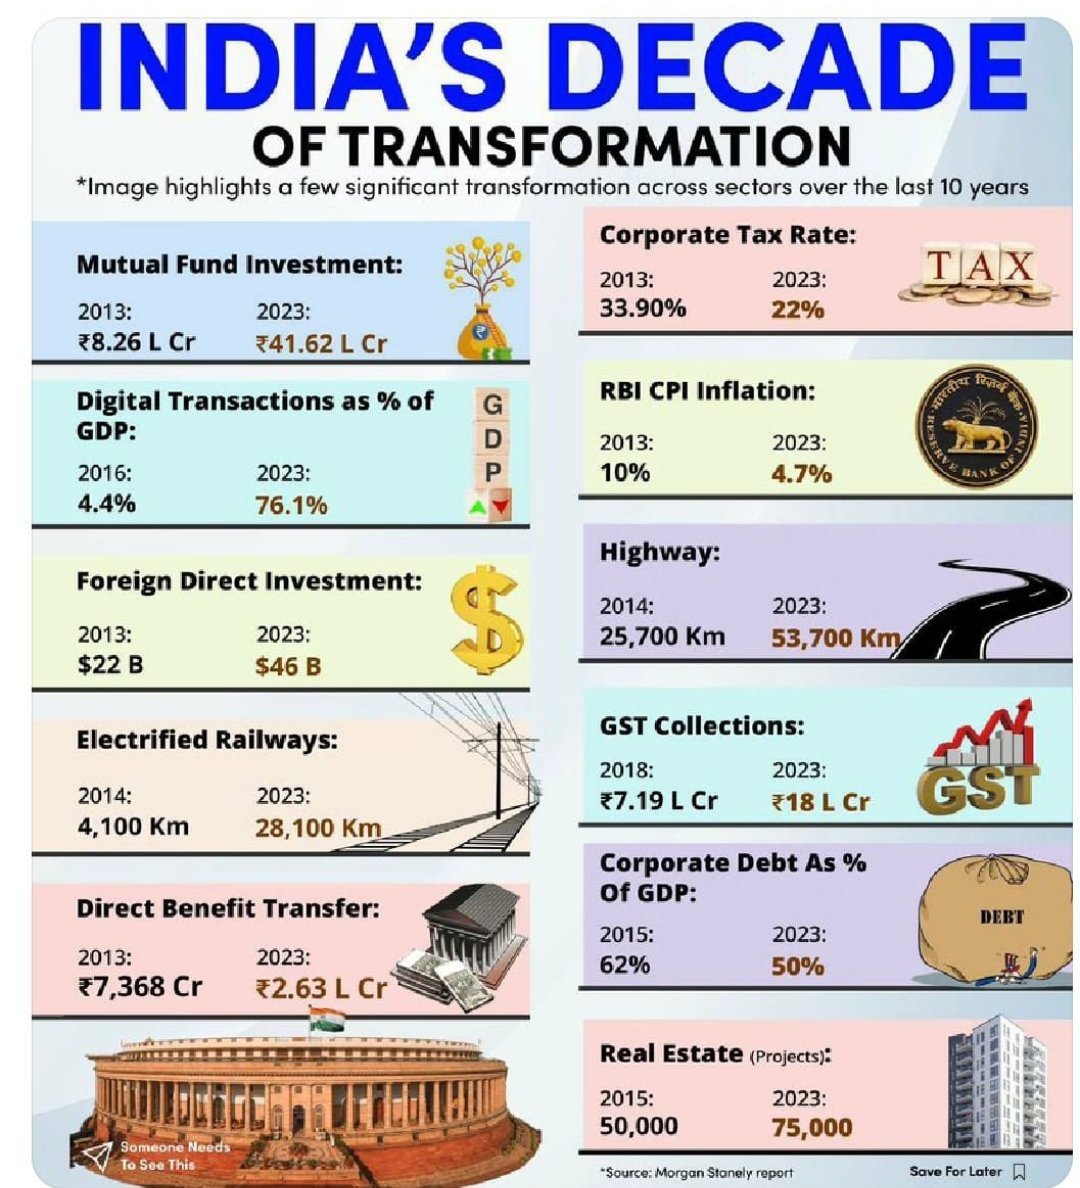 𝗖𝗼𝗻𝗴𝗿𝗮𝘁𝘂𝗹𝗮𝘁𝗶𝗼𝗻𝘀 𝗜𝗻𝗱𝗶𝗮🇮🇳!!
India's decade of transformation

#IndianEconomy #PMOIndia #Congratulations_India